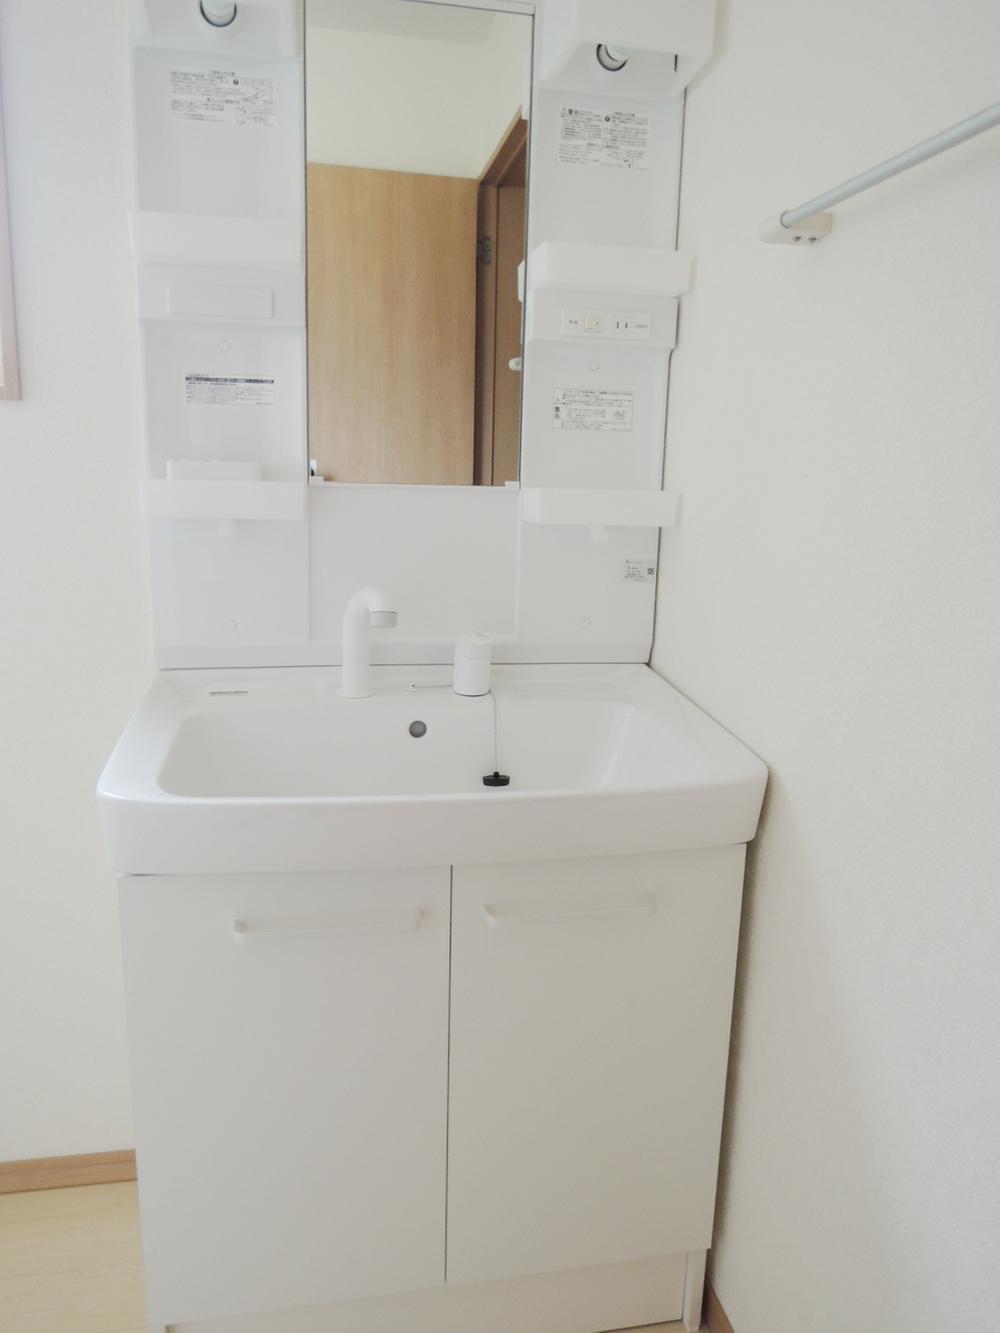 Wash basin, toilet. Same specifications vanity